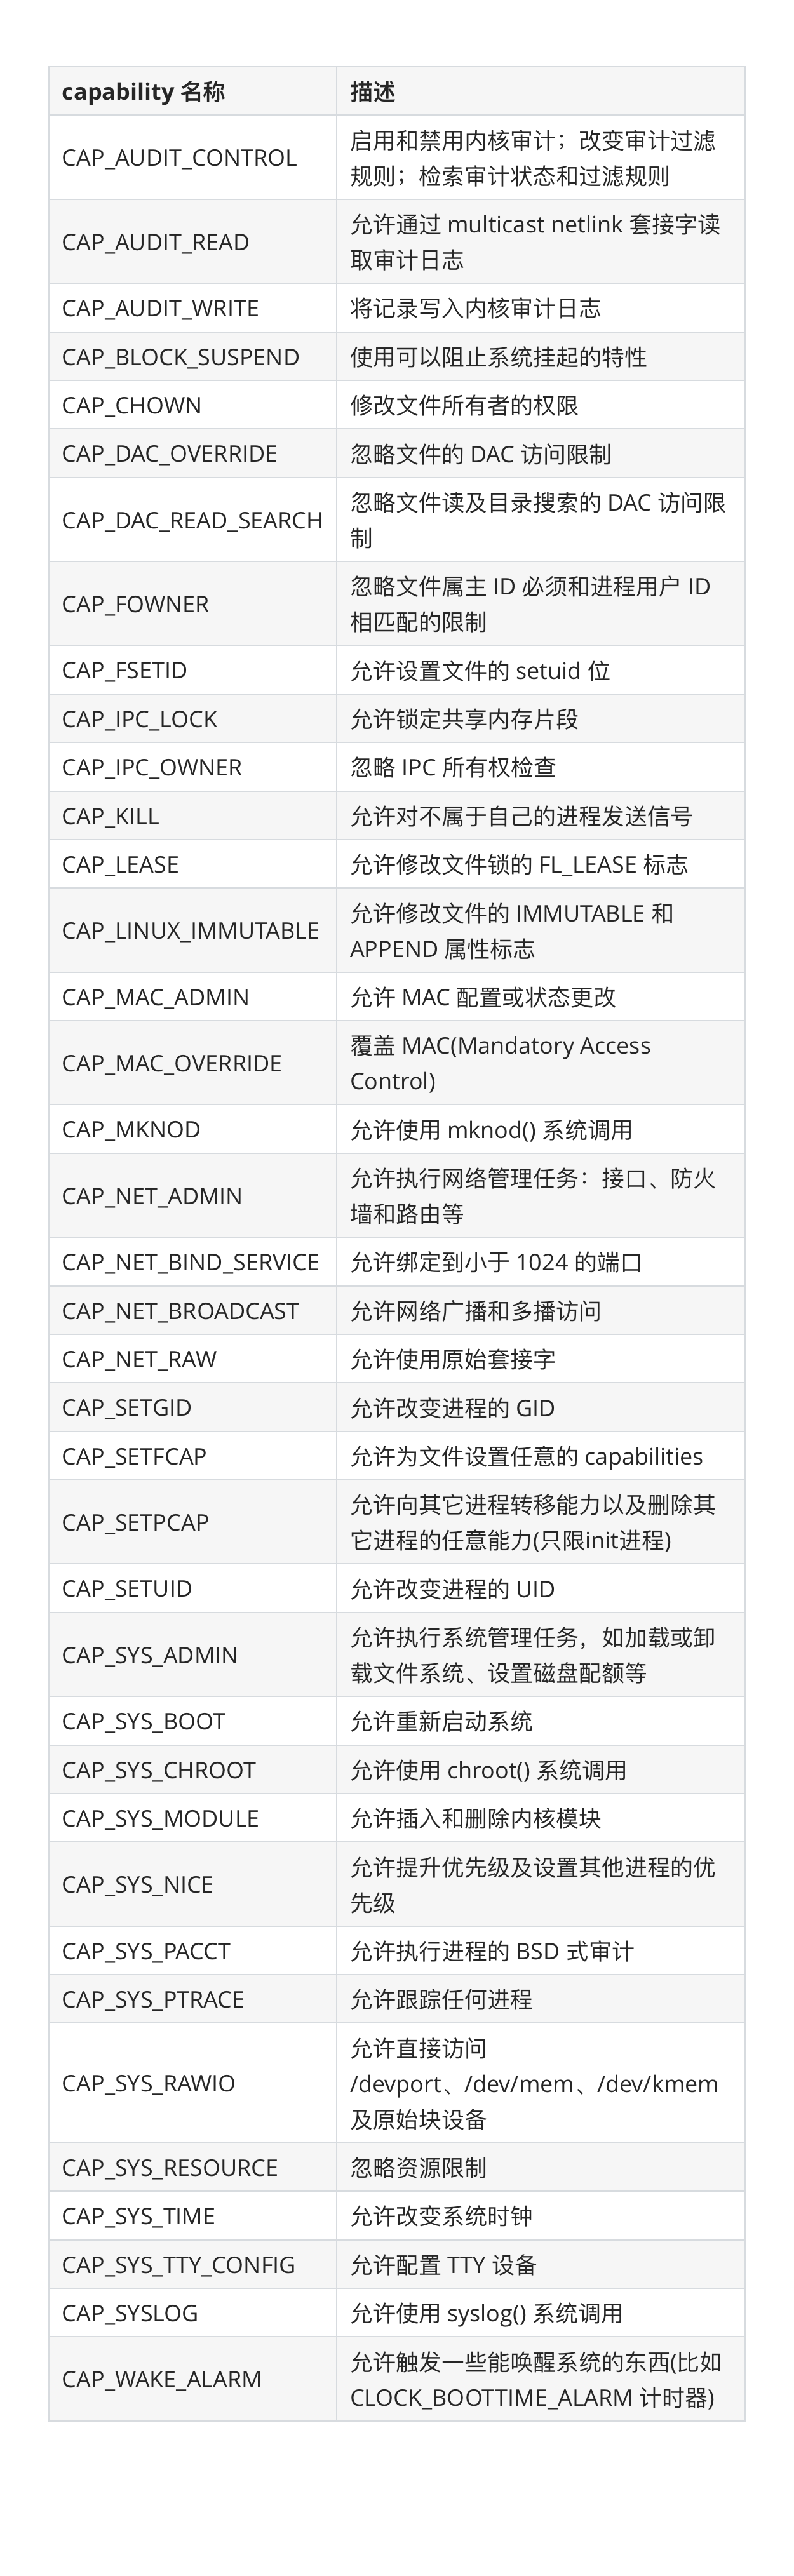 linux capabilities list